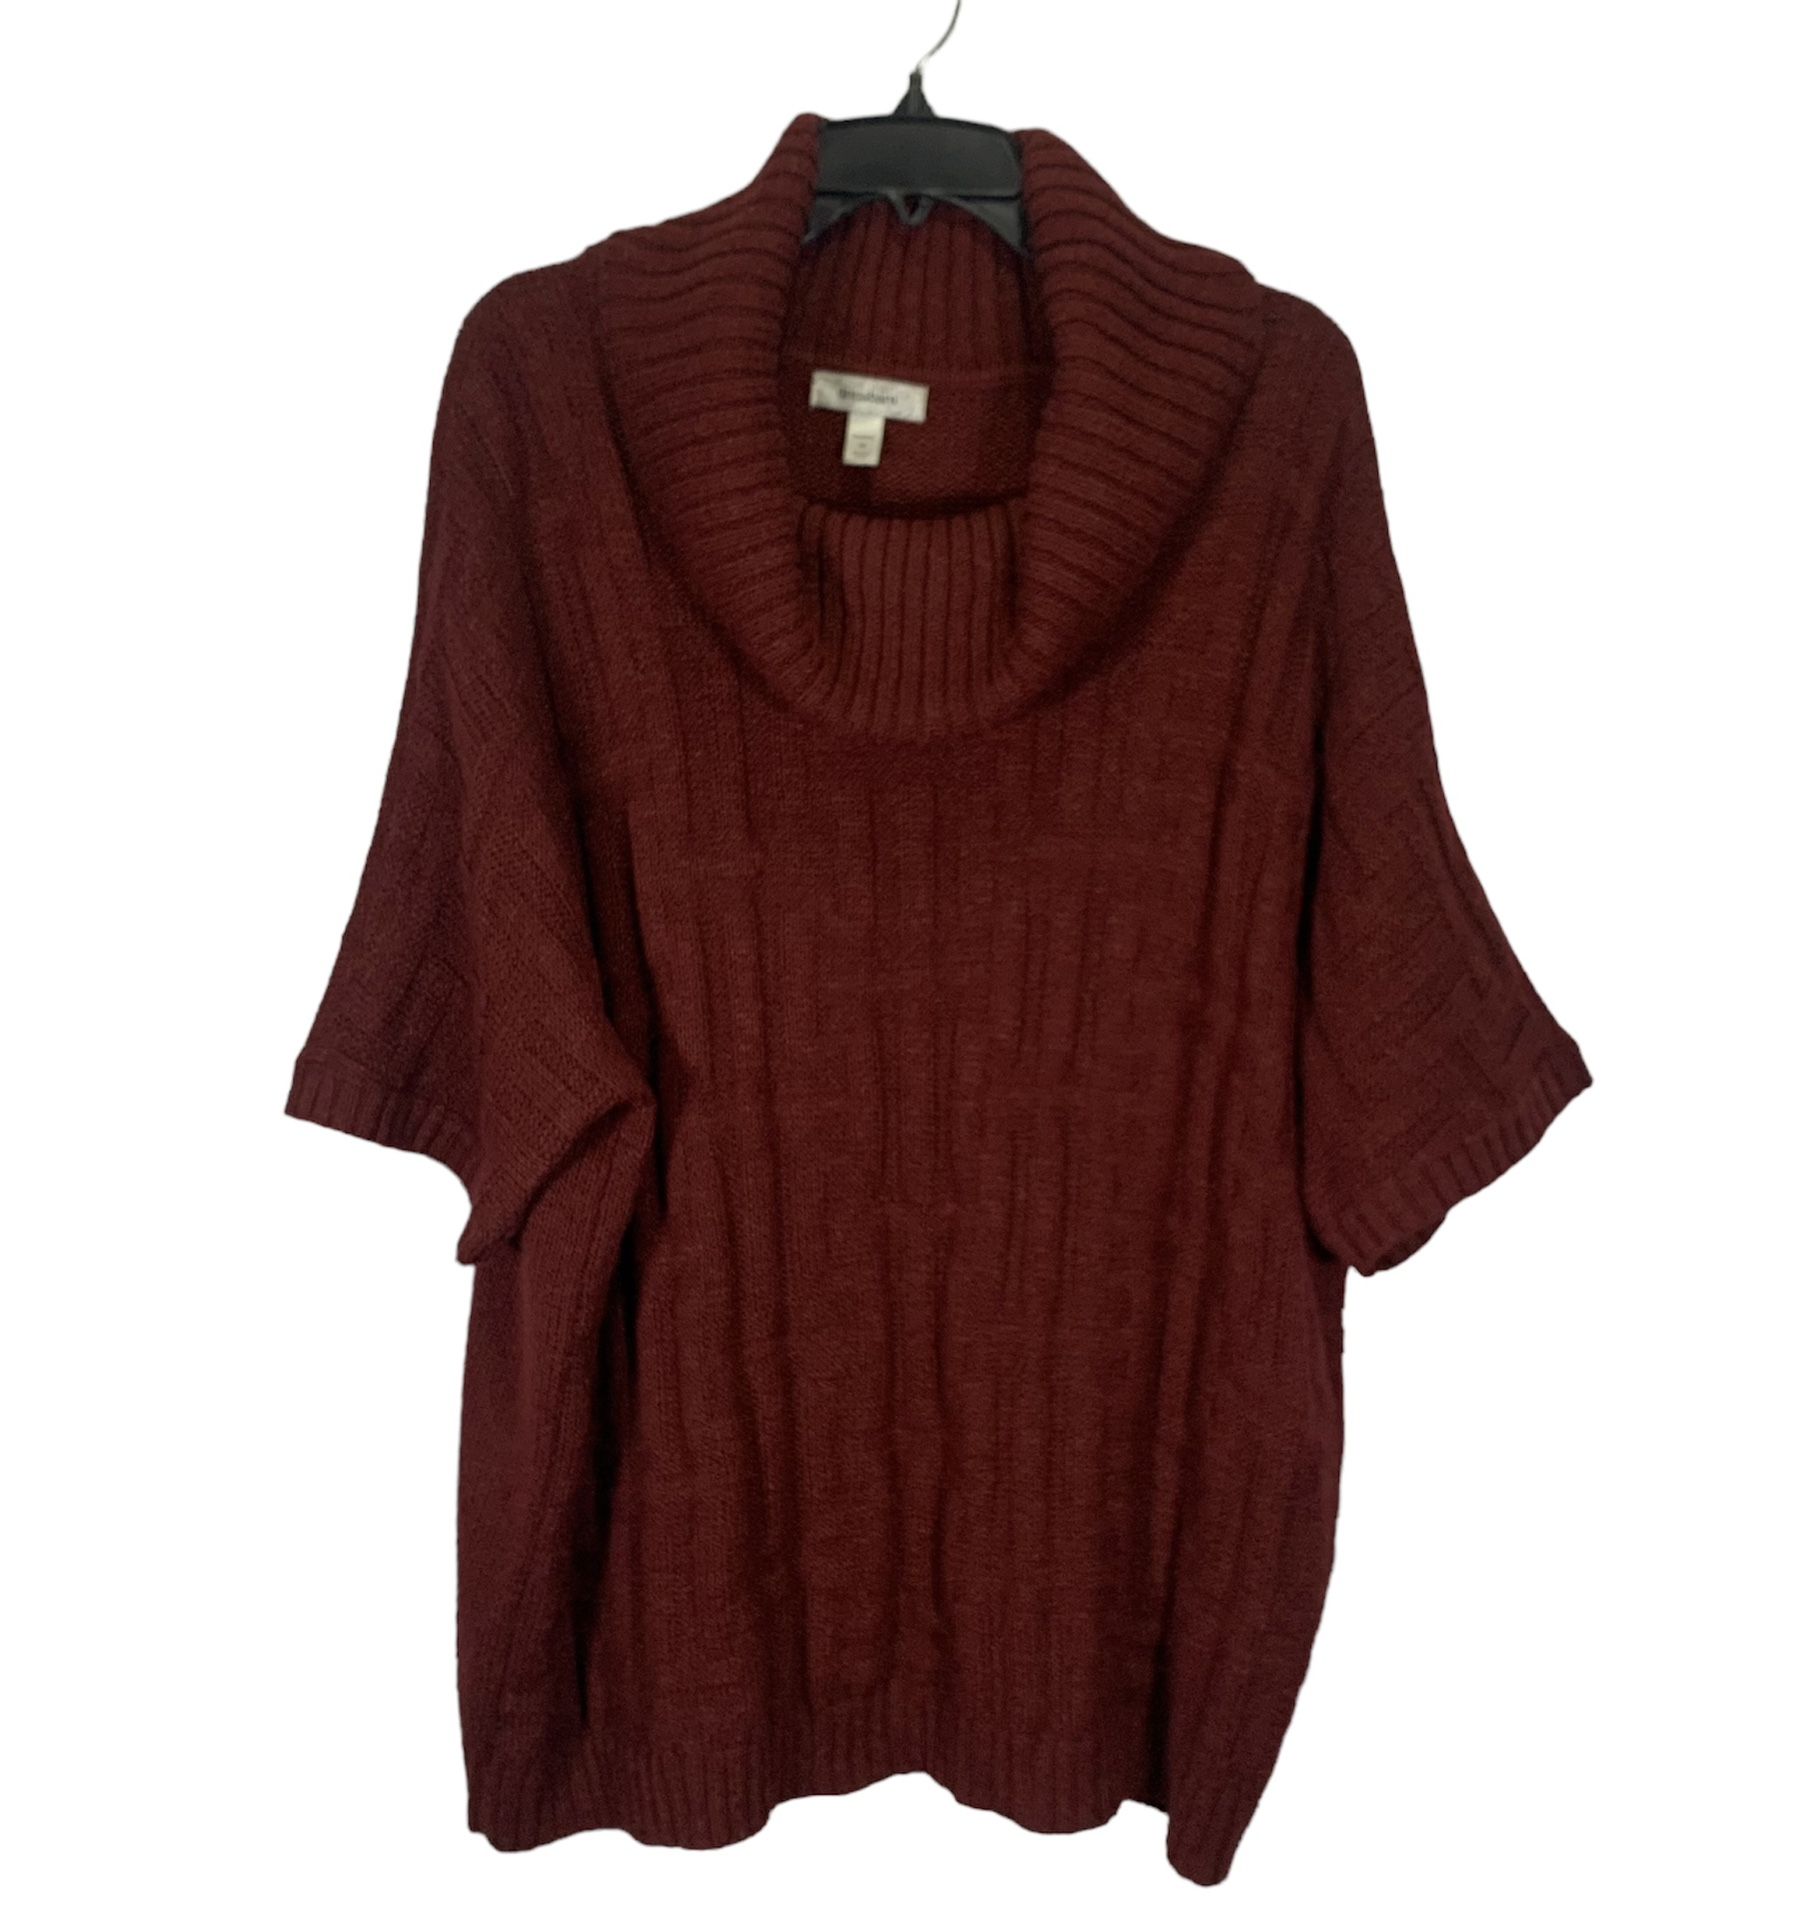 Dress Barn Women’s Pullover Sweater Size 3X